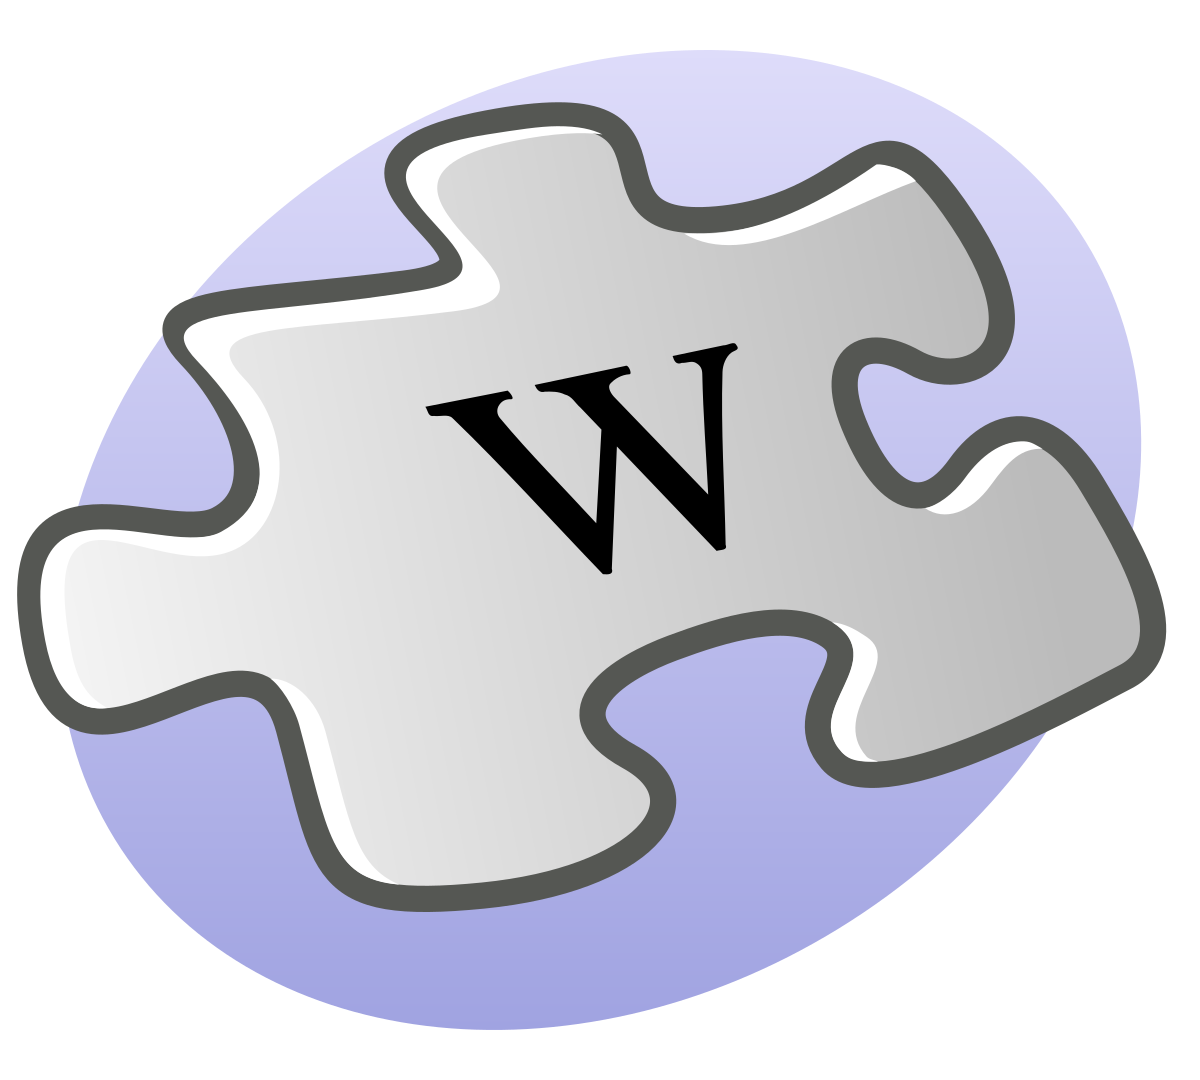 Вики. Вика. Логотип w. Вики сайты. Https www wikipedia